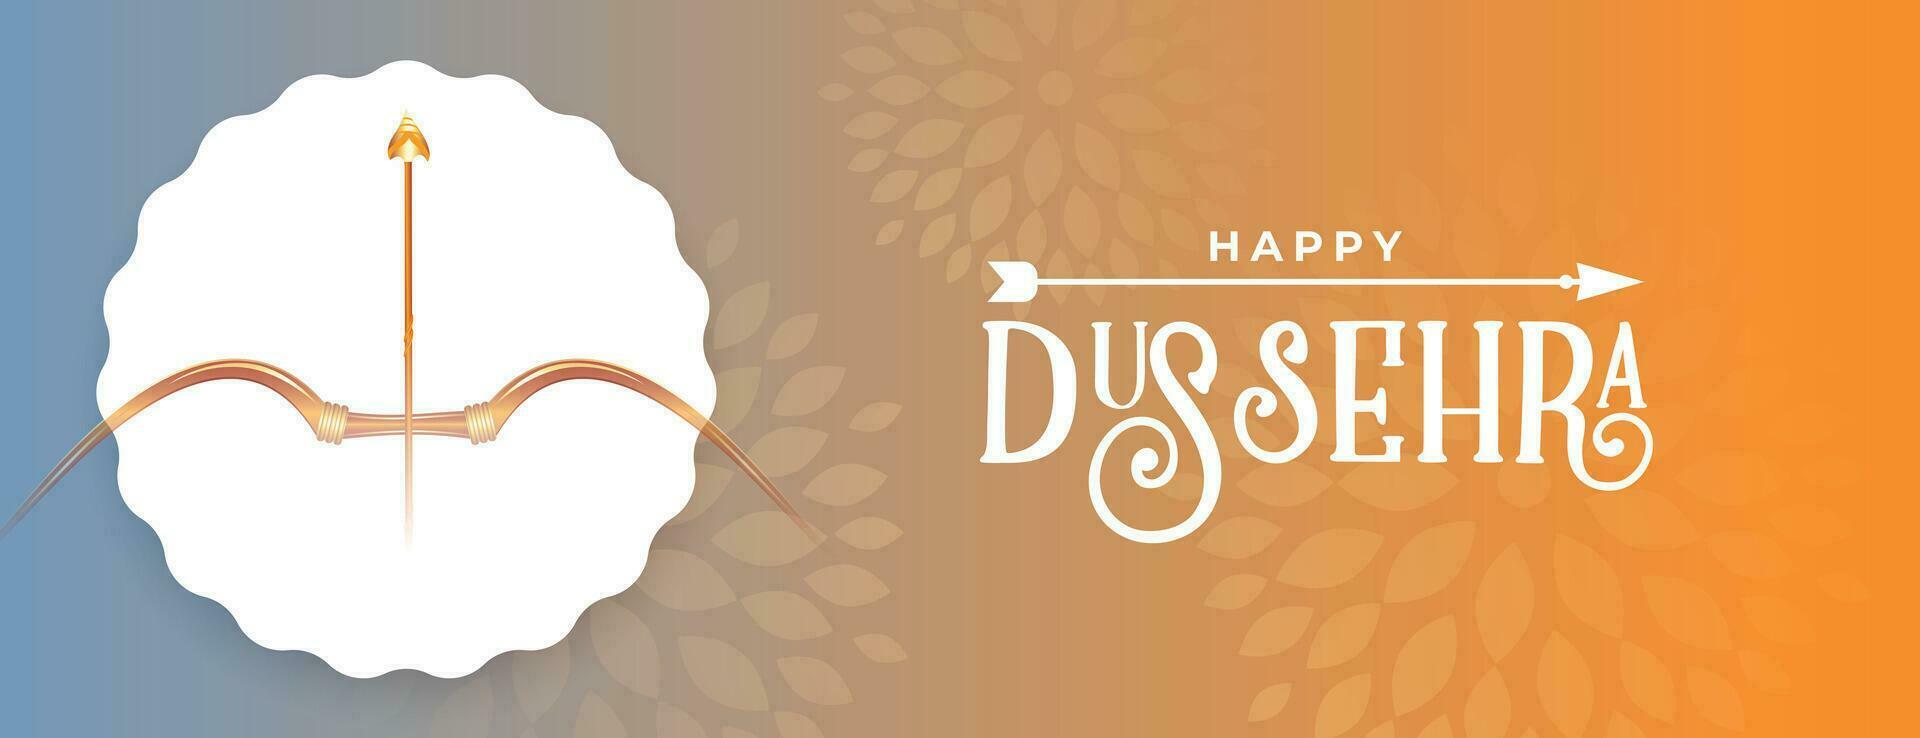 happy dussehra greeting banner design vector